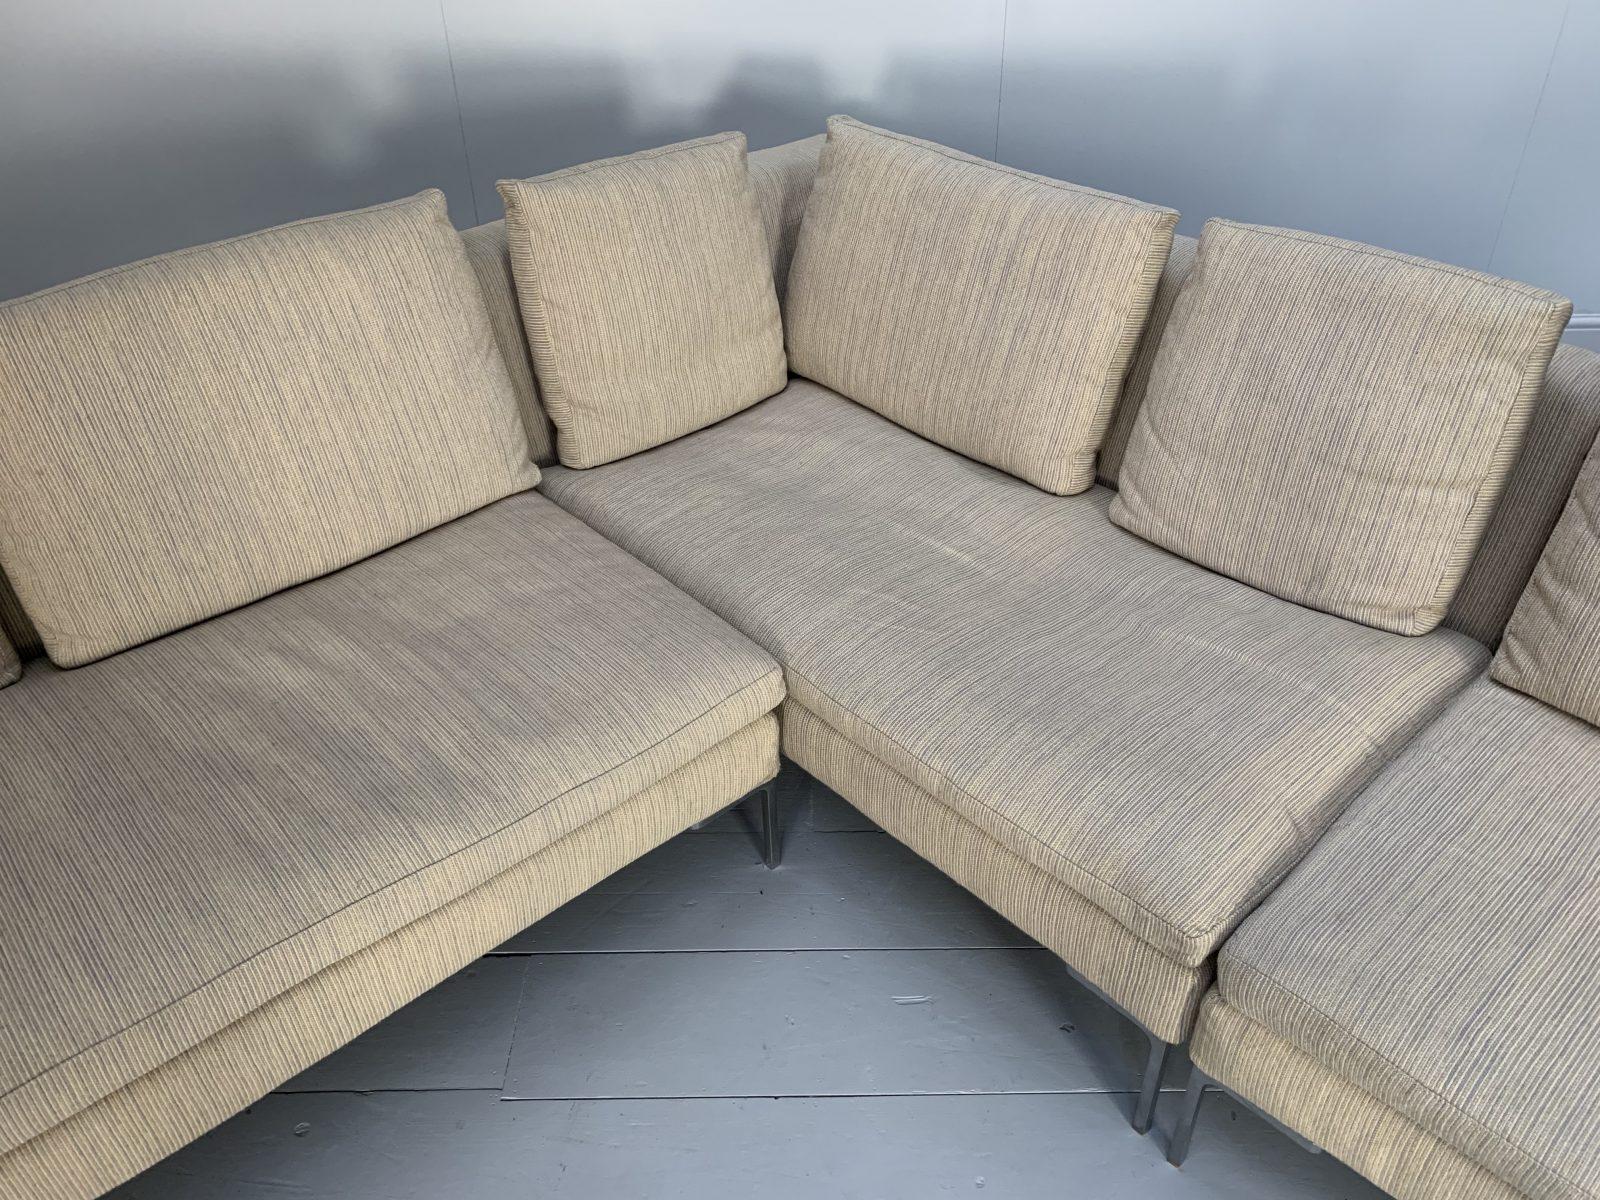 B&B Italia “Charles” L-Shape Sectional Sofa in Stripe Wool For Sale 3